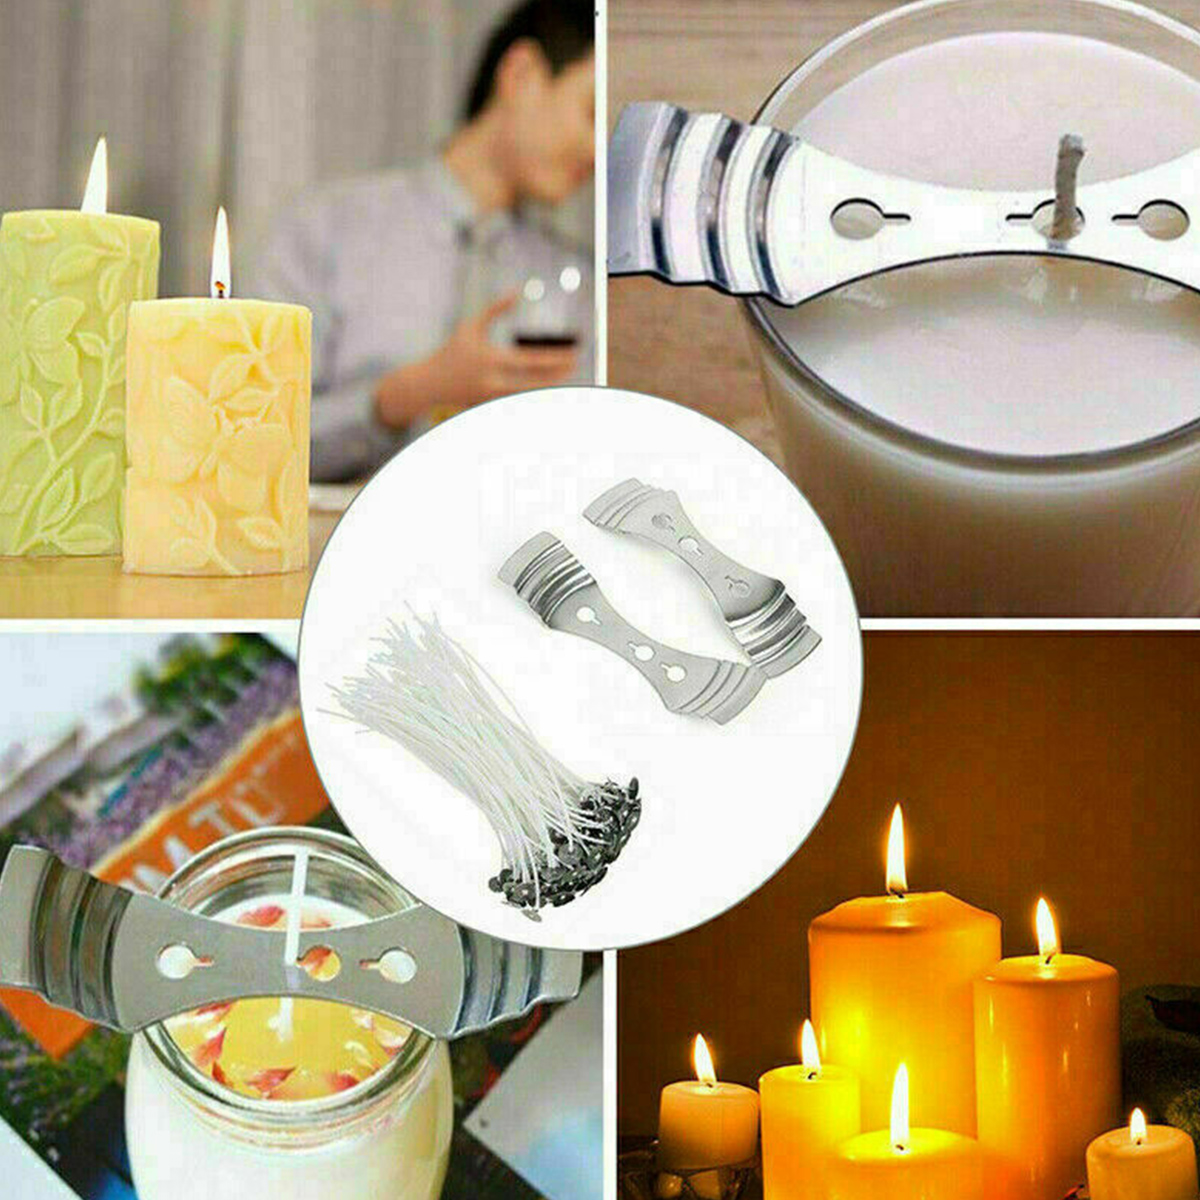 DIY-Candle-Making-Kit-Candles-Craft-Tool-Set-Pouring-Pot-Wicks-Wax-Mould-Kit-1836060-2